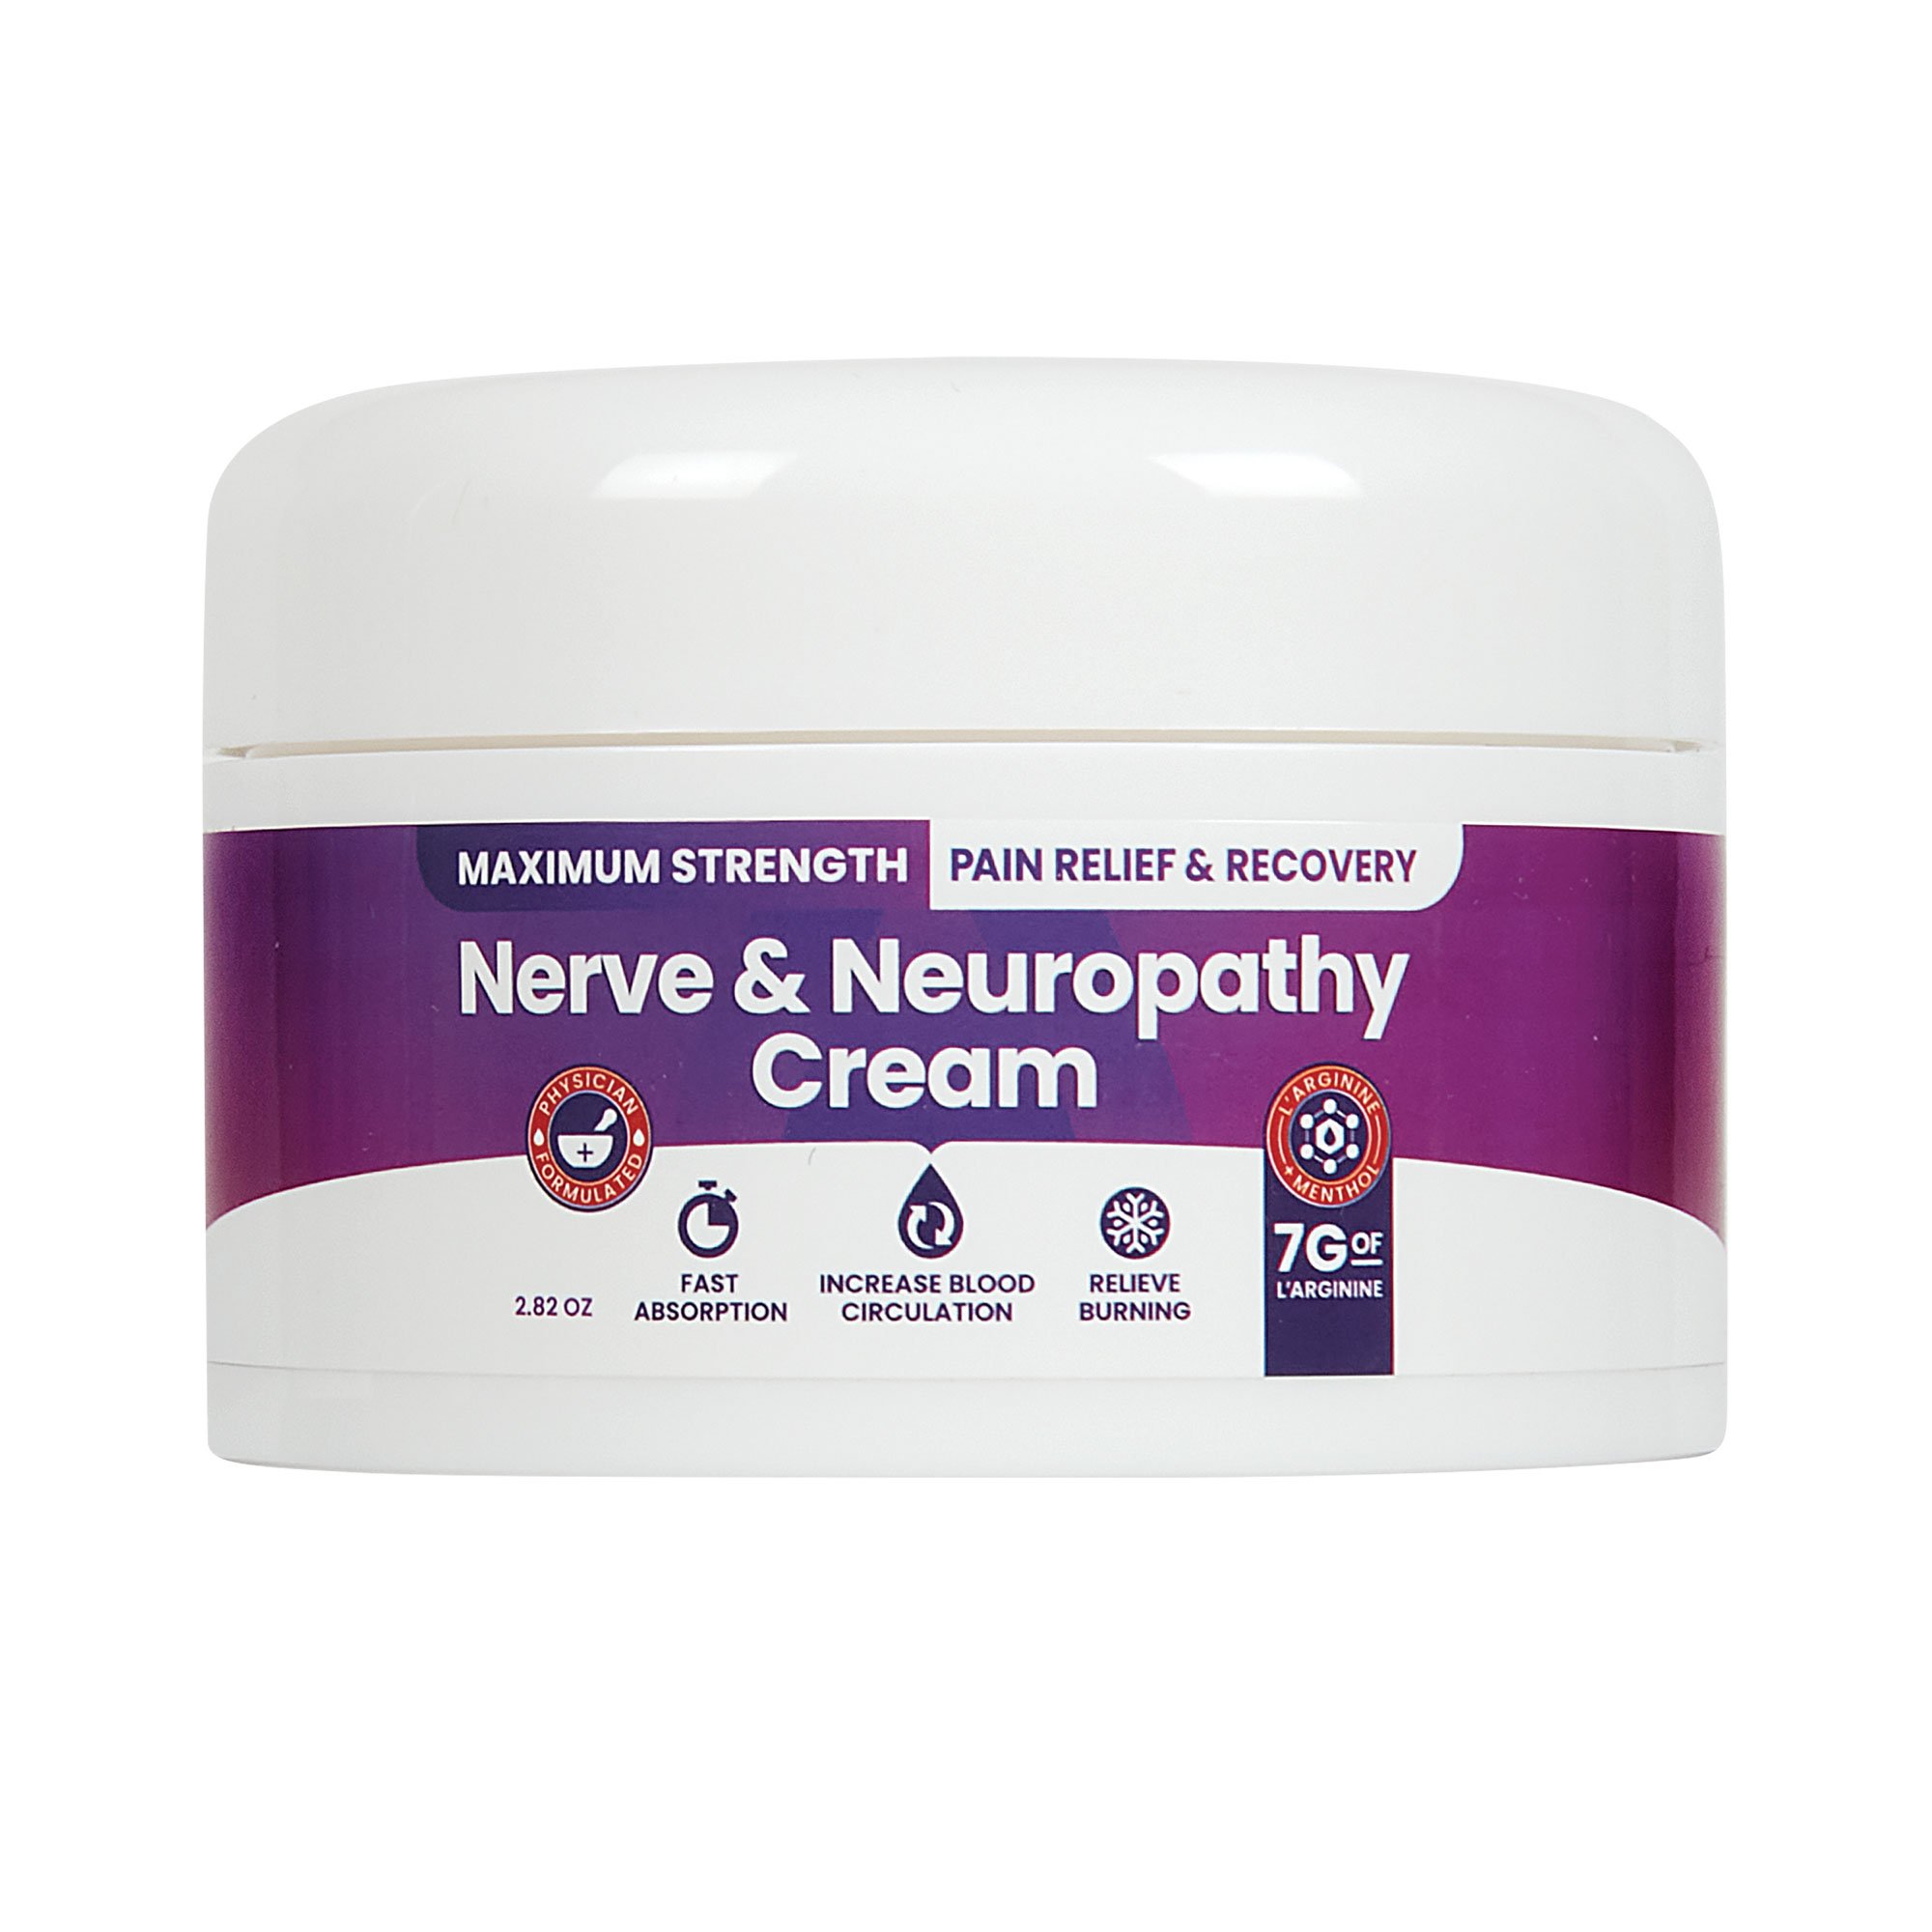 Nerve & Neuropathy Cream